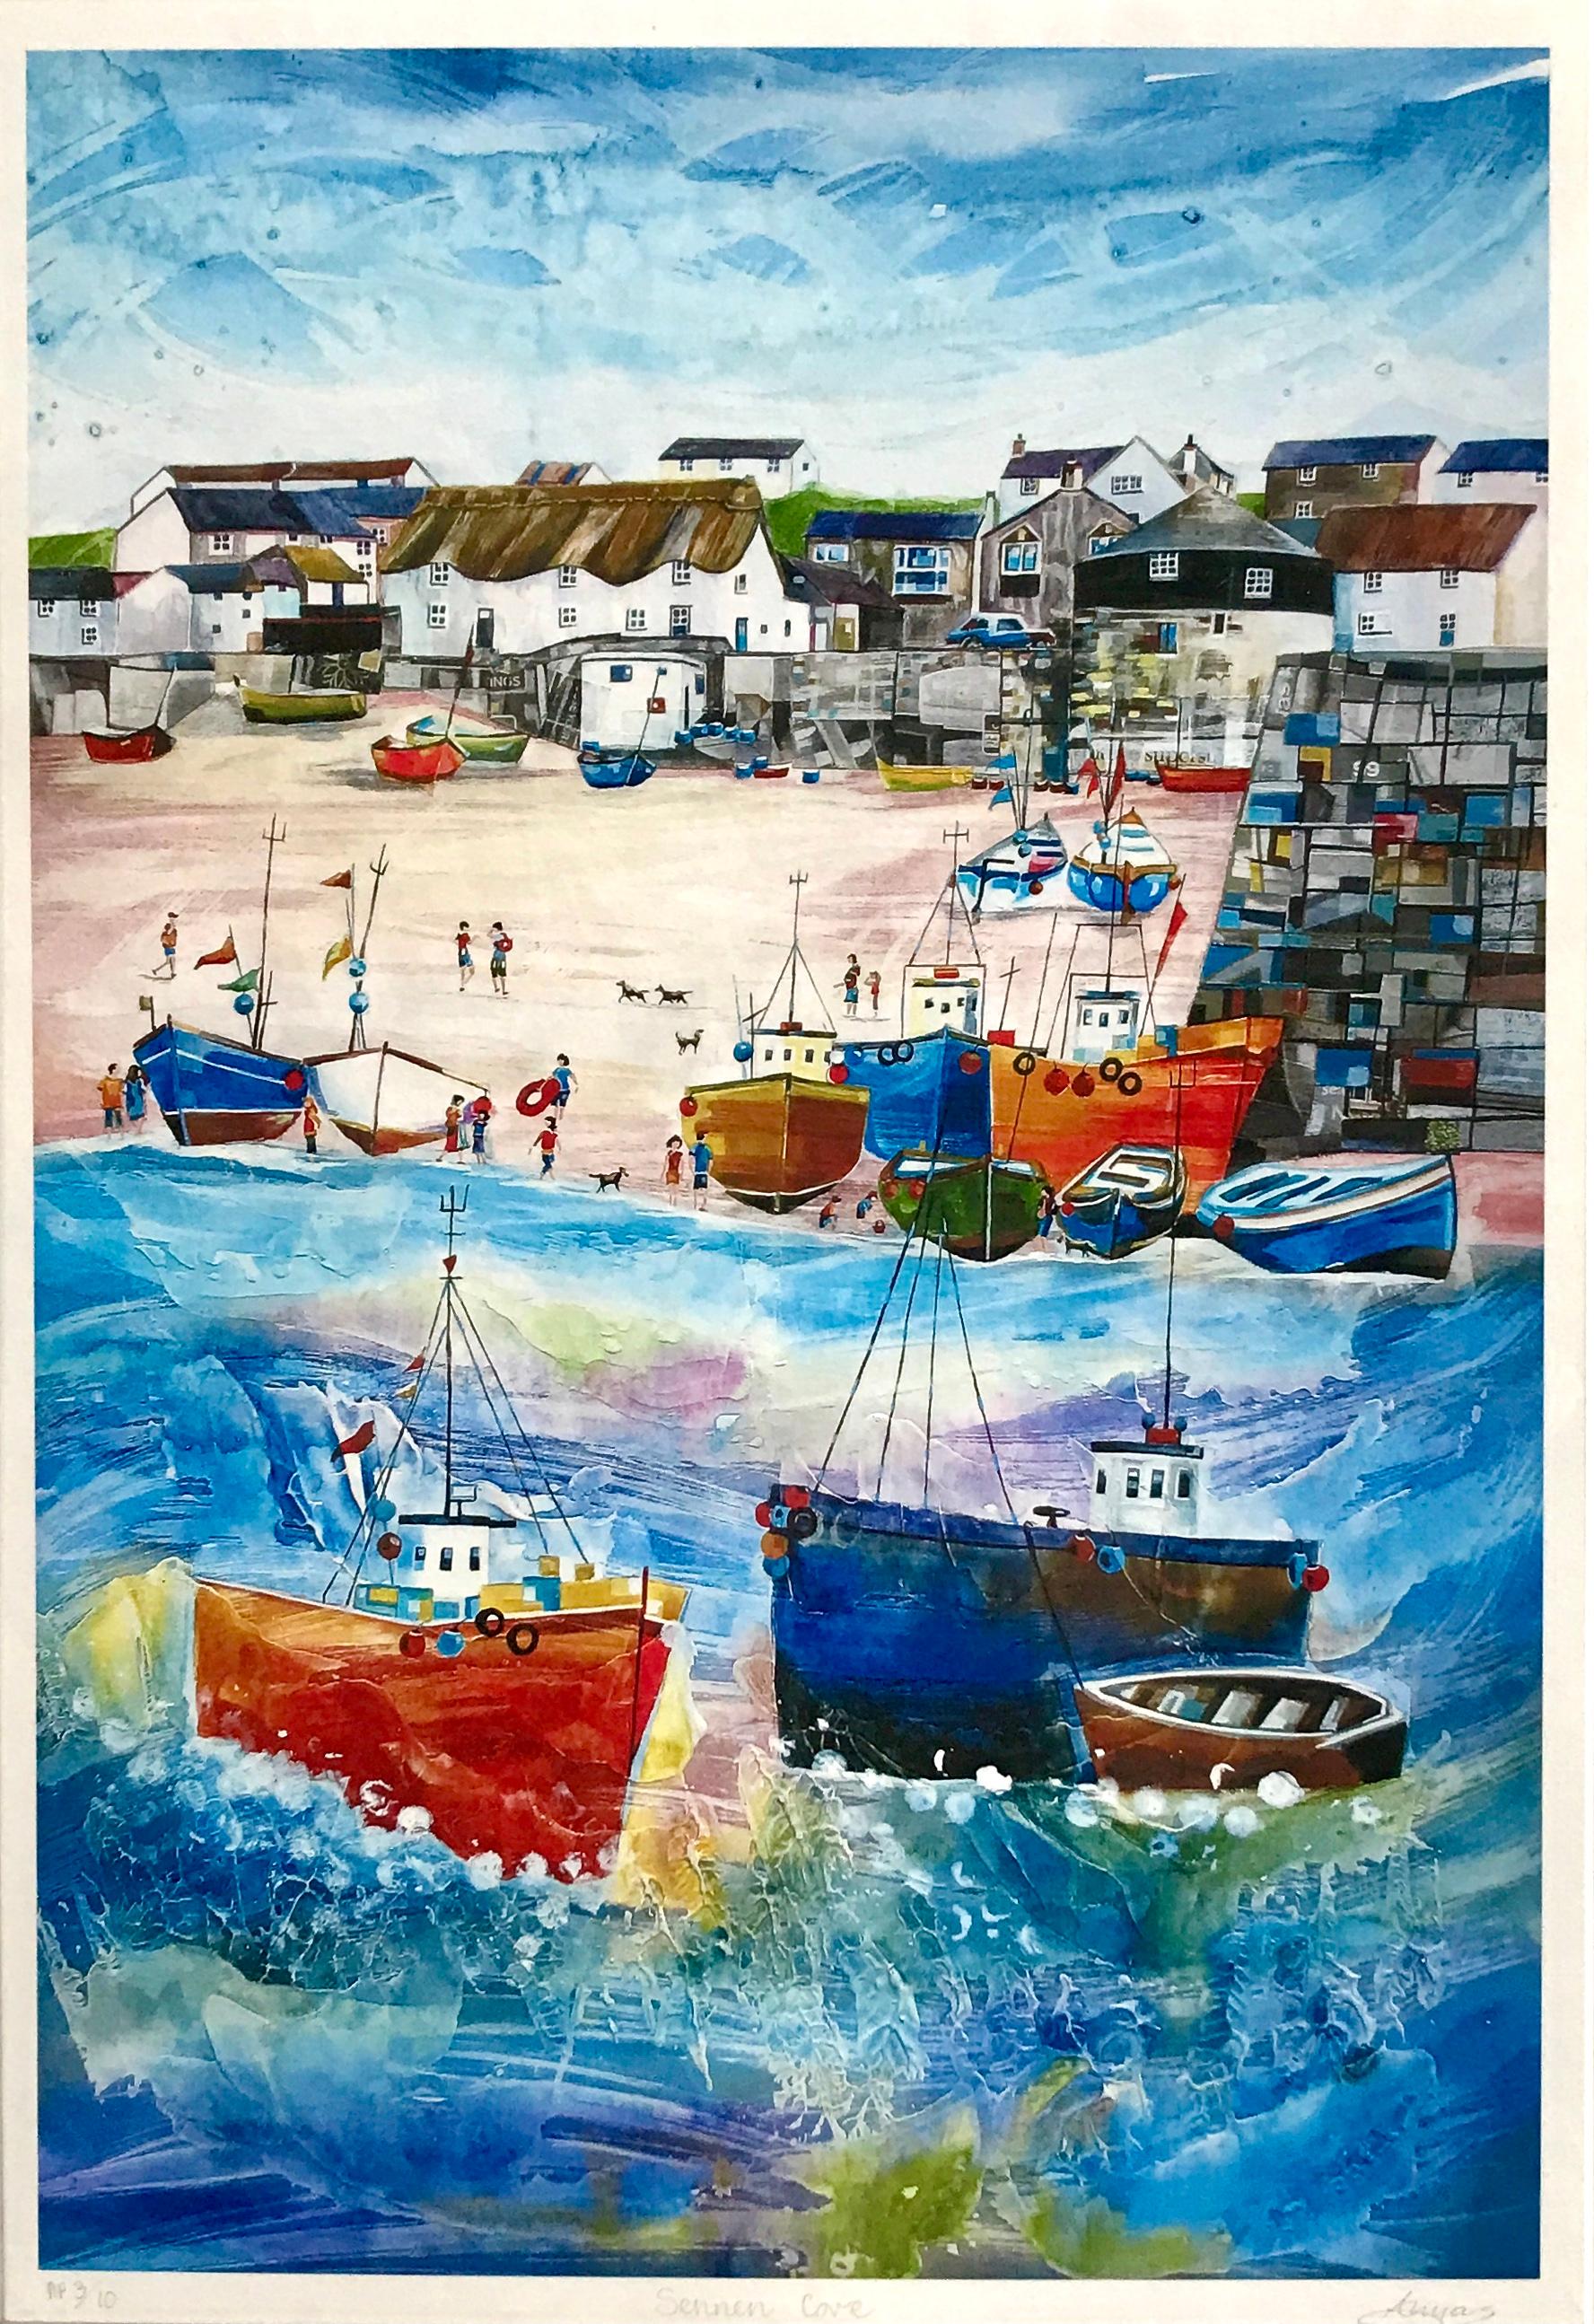 Sennen Cove, Cornwall, Mounted Giclée print, Seaside, Coastal, Beach, Boats, Sun For Sale 7